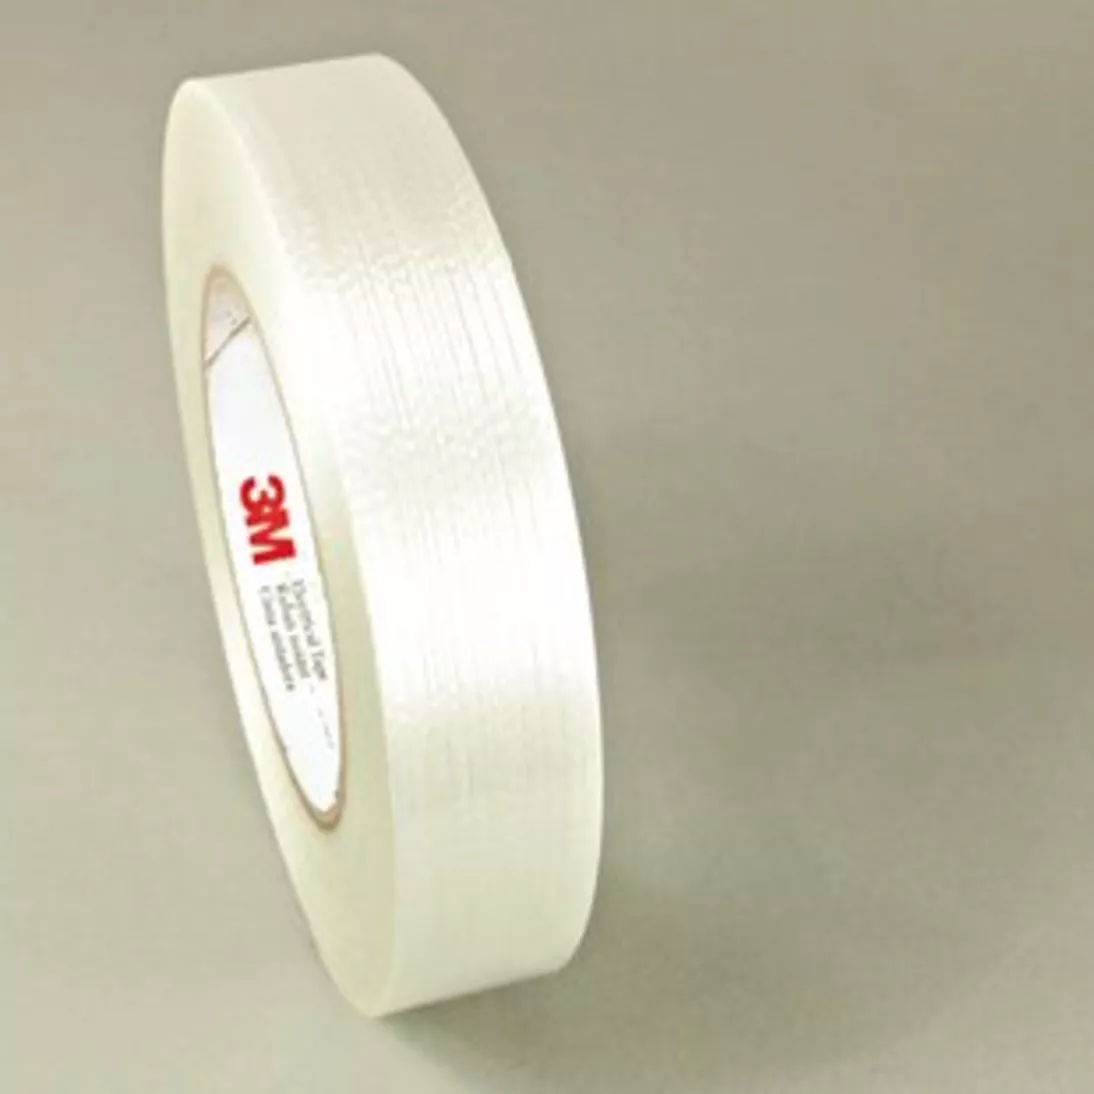 3M™ Filament-Reinforced Electrical Tape 1139, 25.5 in x 60 yd (64.77 cm
x 58.8 m), logroll